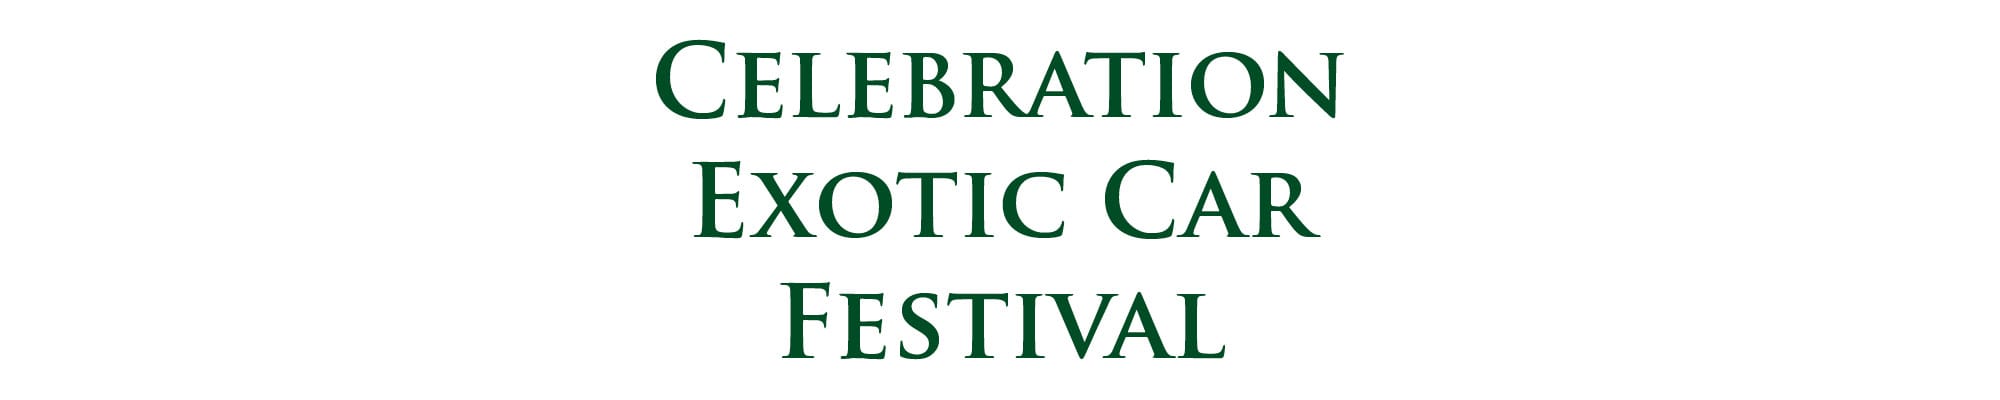 Celebration-Exotic-Car-Festival